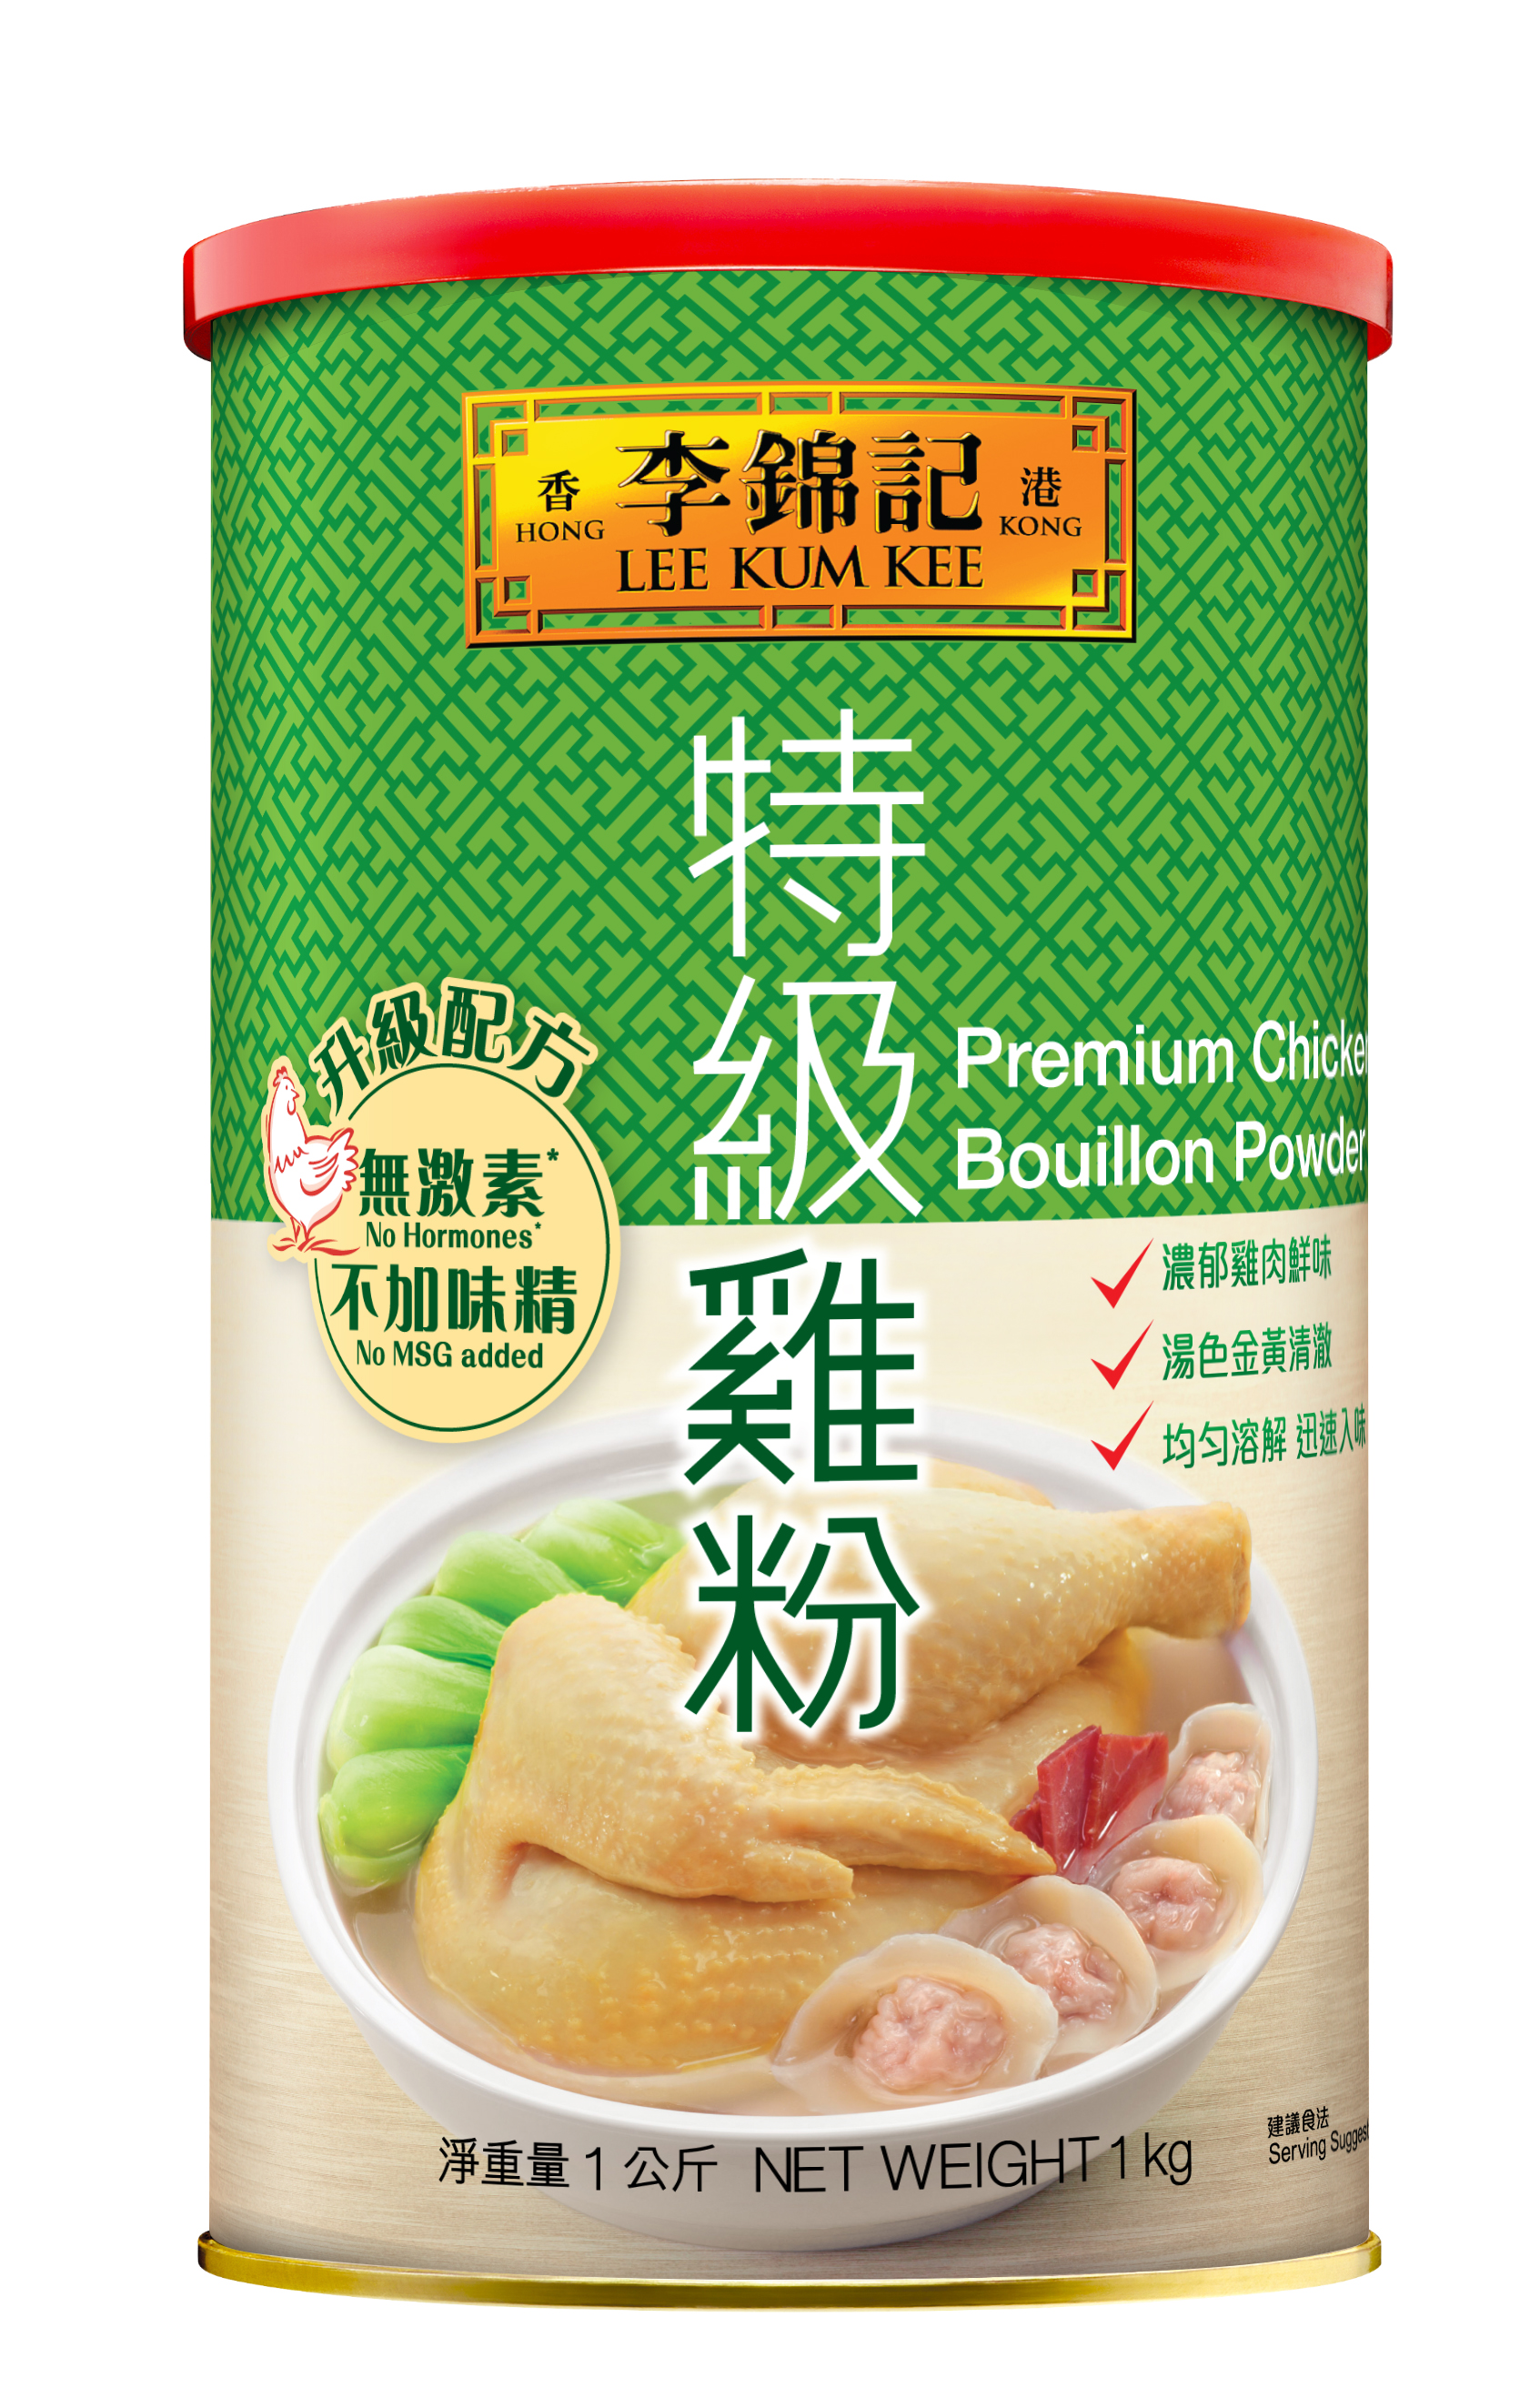 Premium Chicken Bouillon Powder (No MSG Added)| Lee Kum Kee Professional HK  | HONG KONG